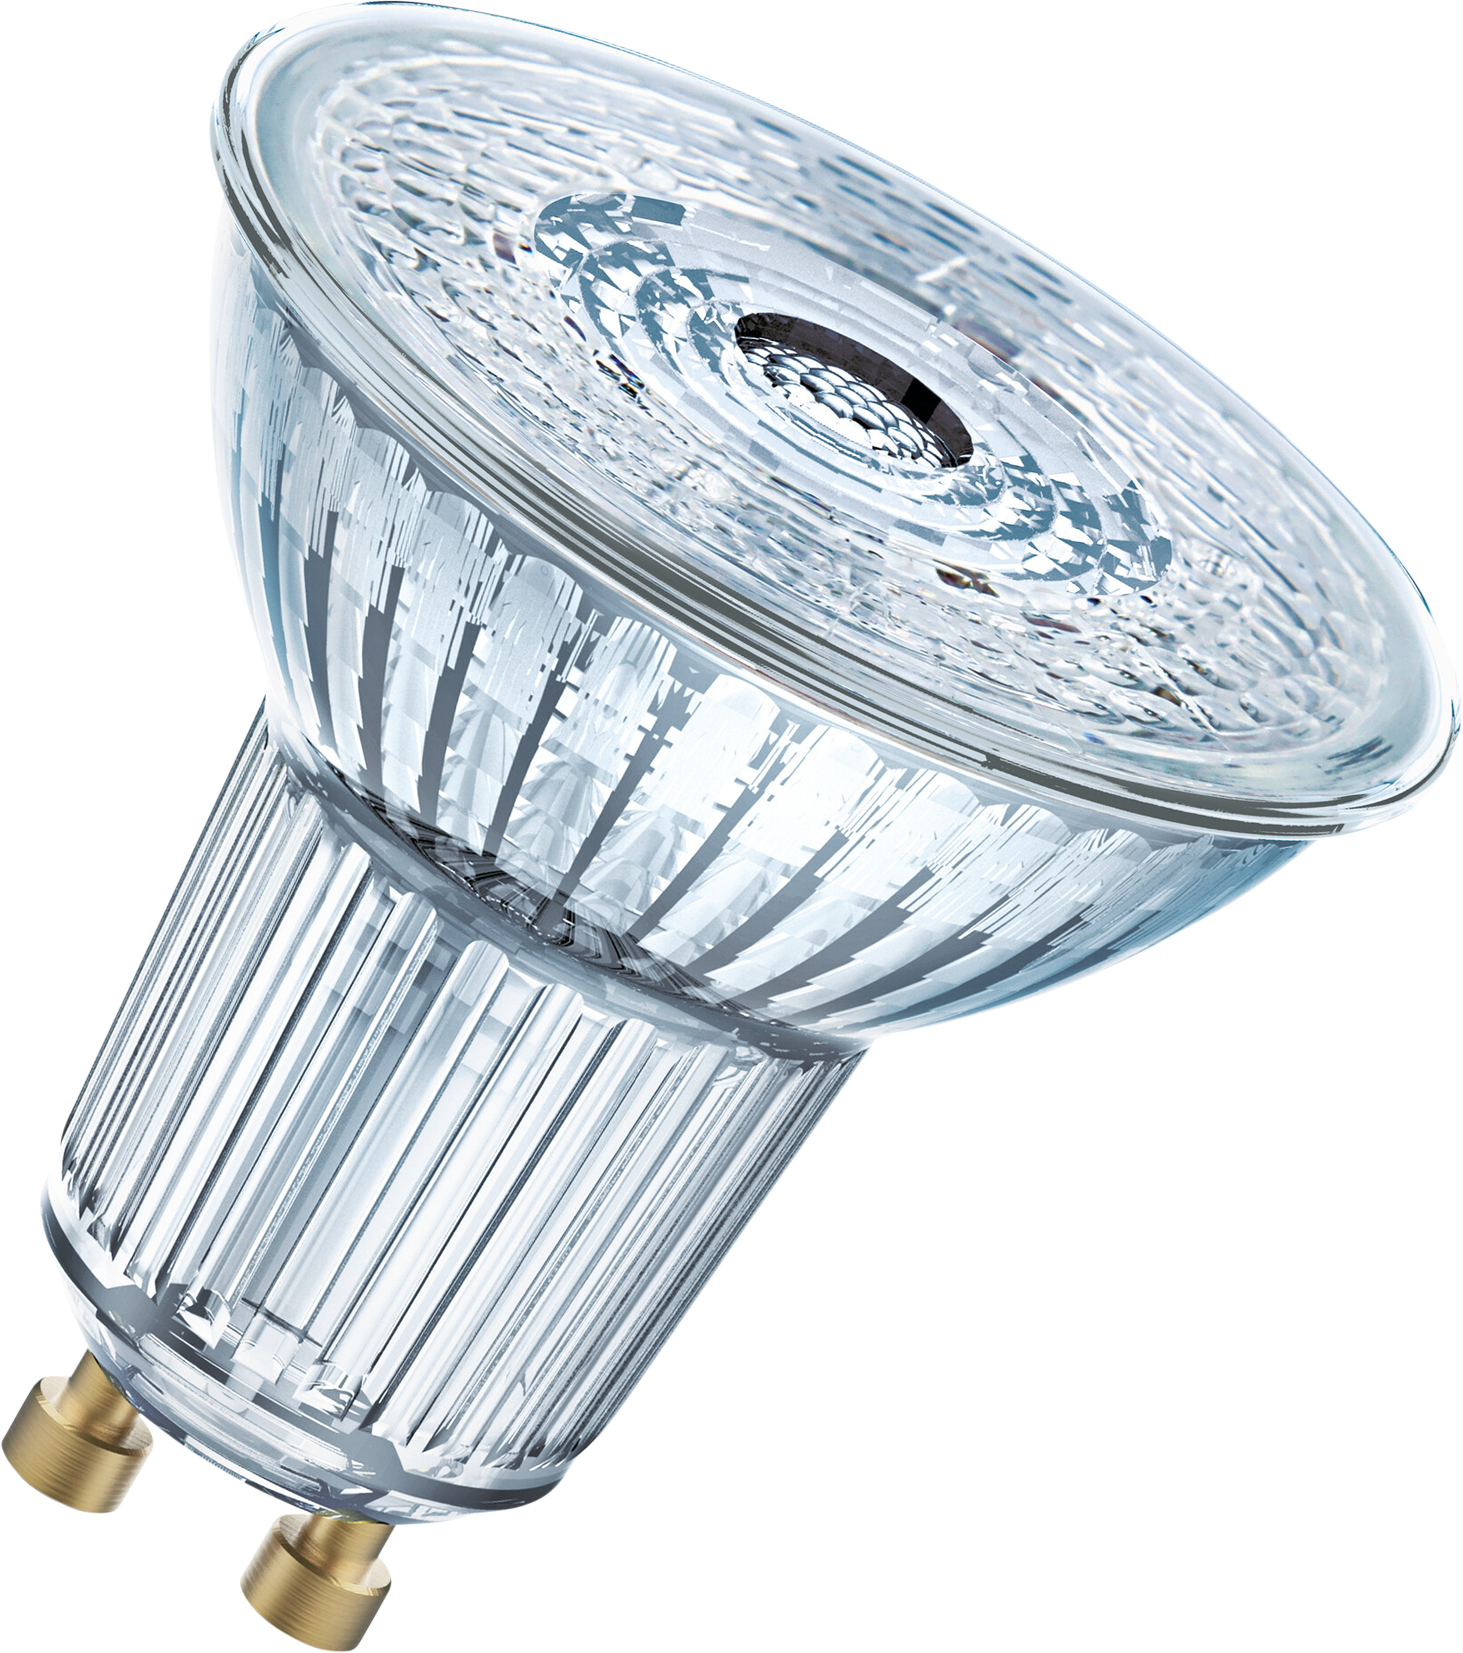 OSRAM LED-Lampe Star PAR16 GU10, 4.3W, 350lm, warmweiss - Lampen, Leuchten